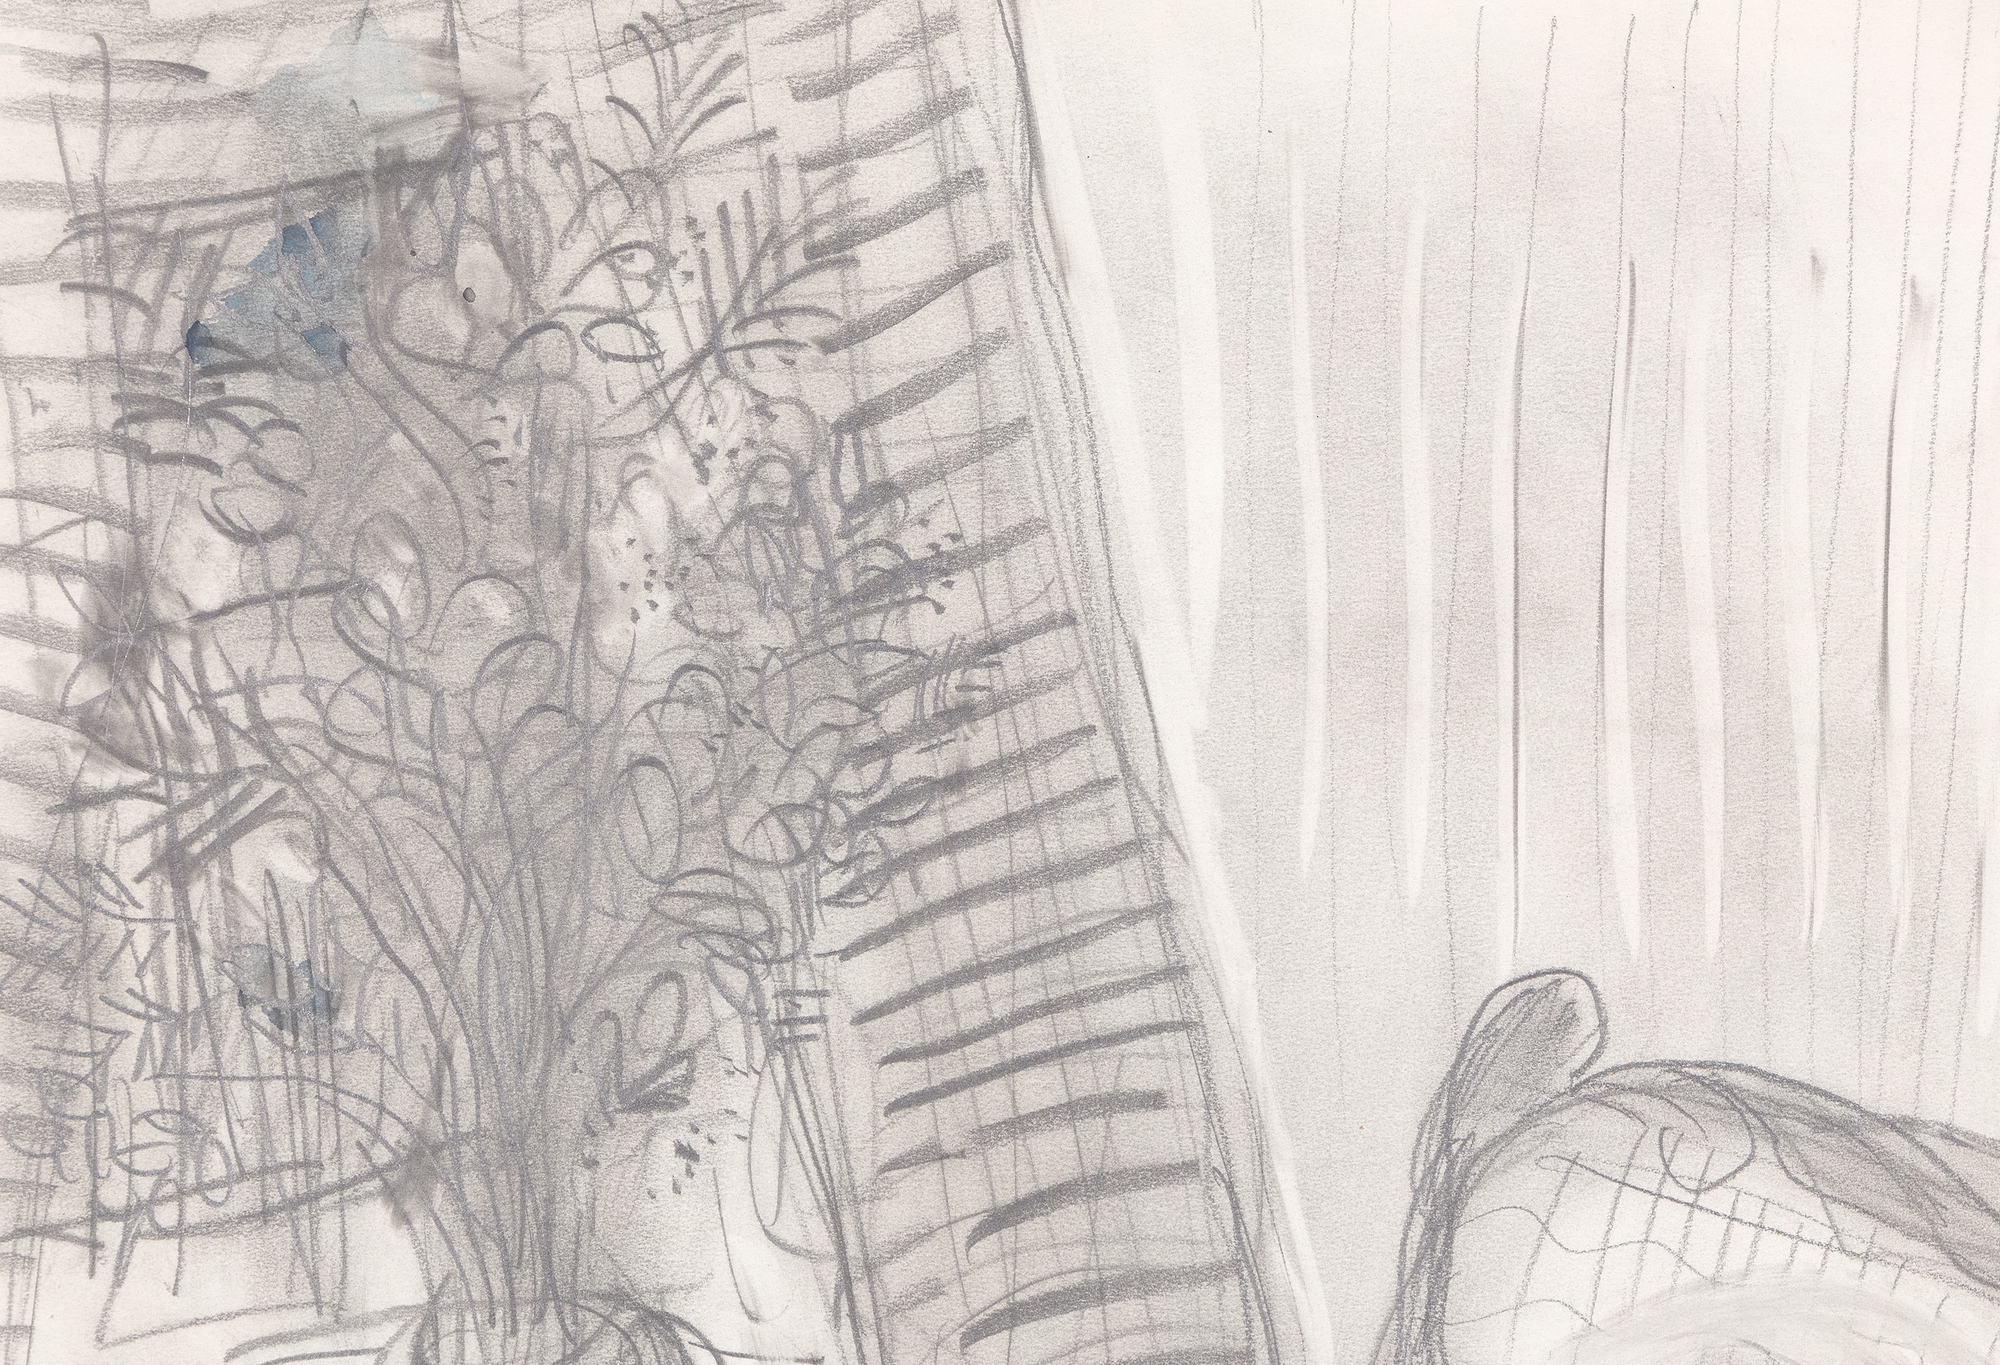 MARC CHAGALL - Les Amoureux sur le divan - watercolor and pencil on paper - 25 1/2 x 19 1/2 in.